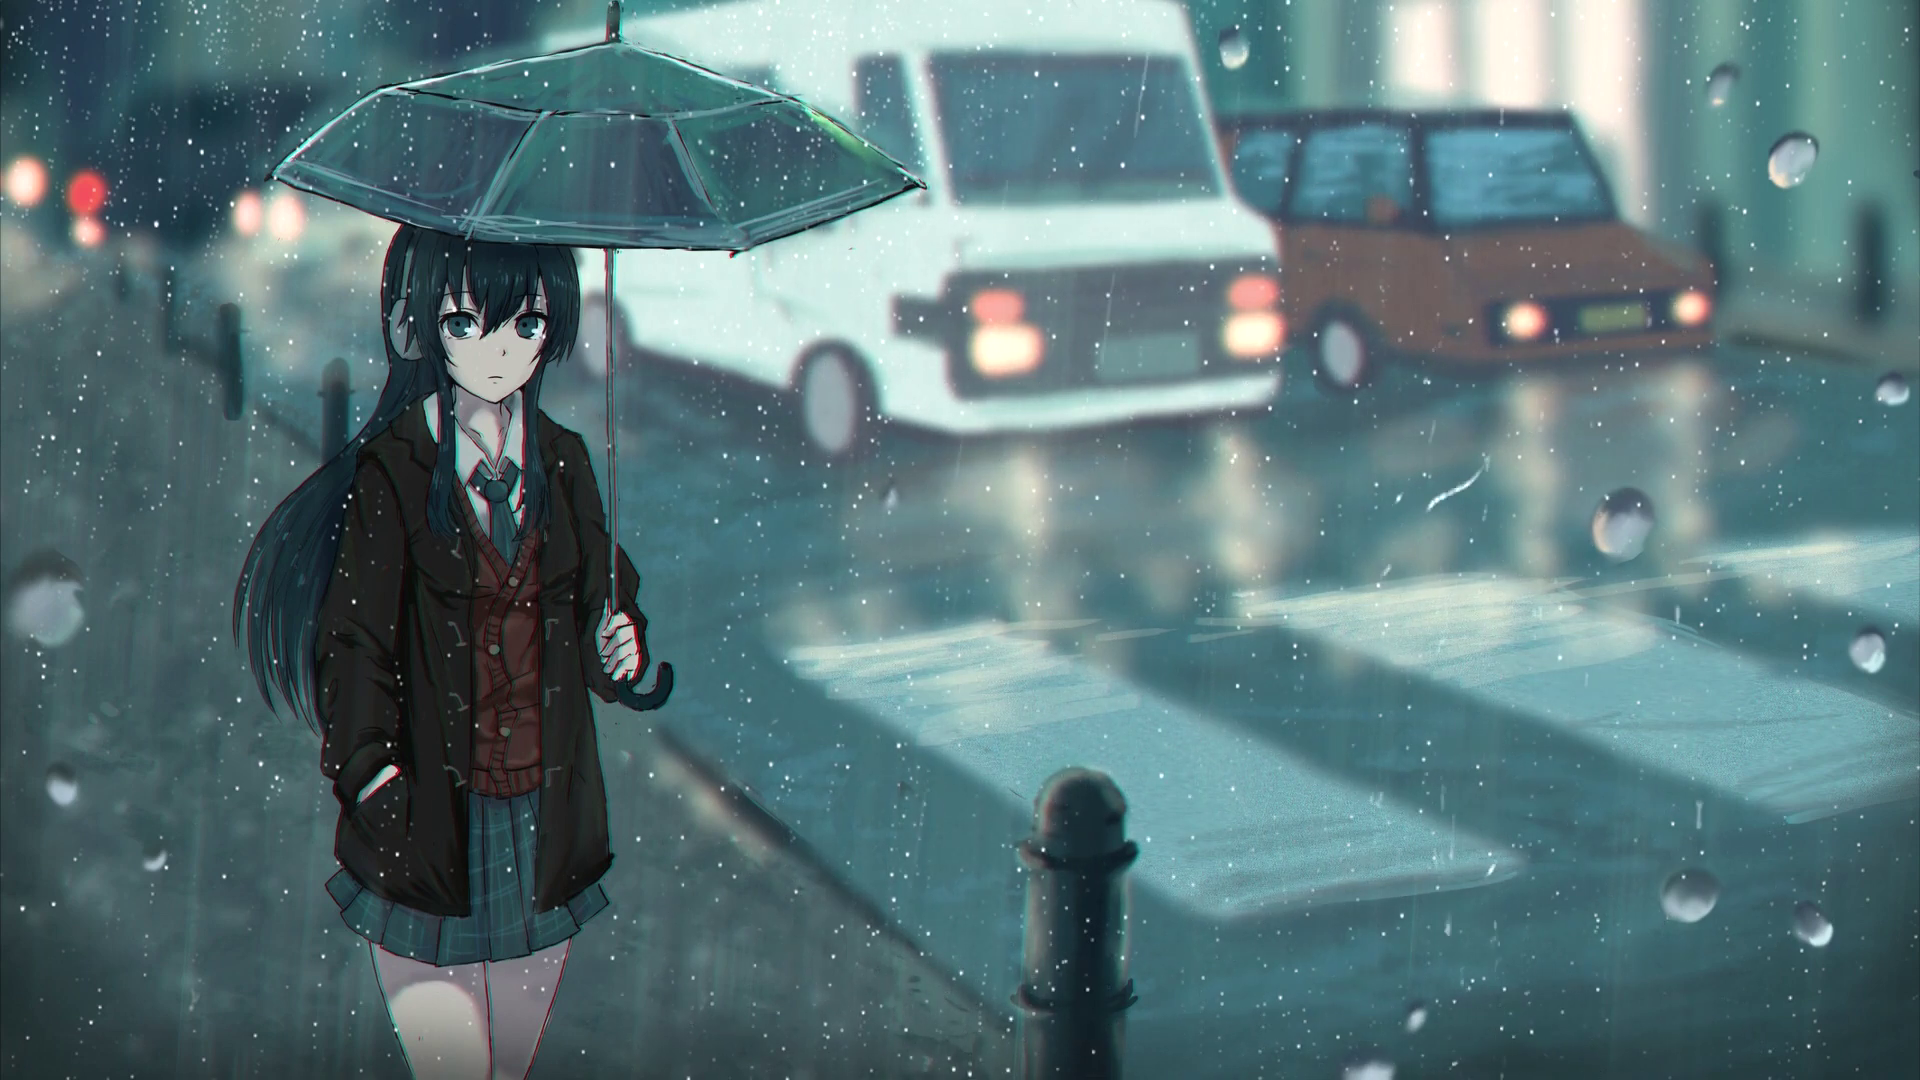 Anime Rainy Day Wallpapers.